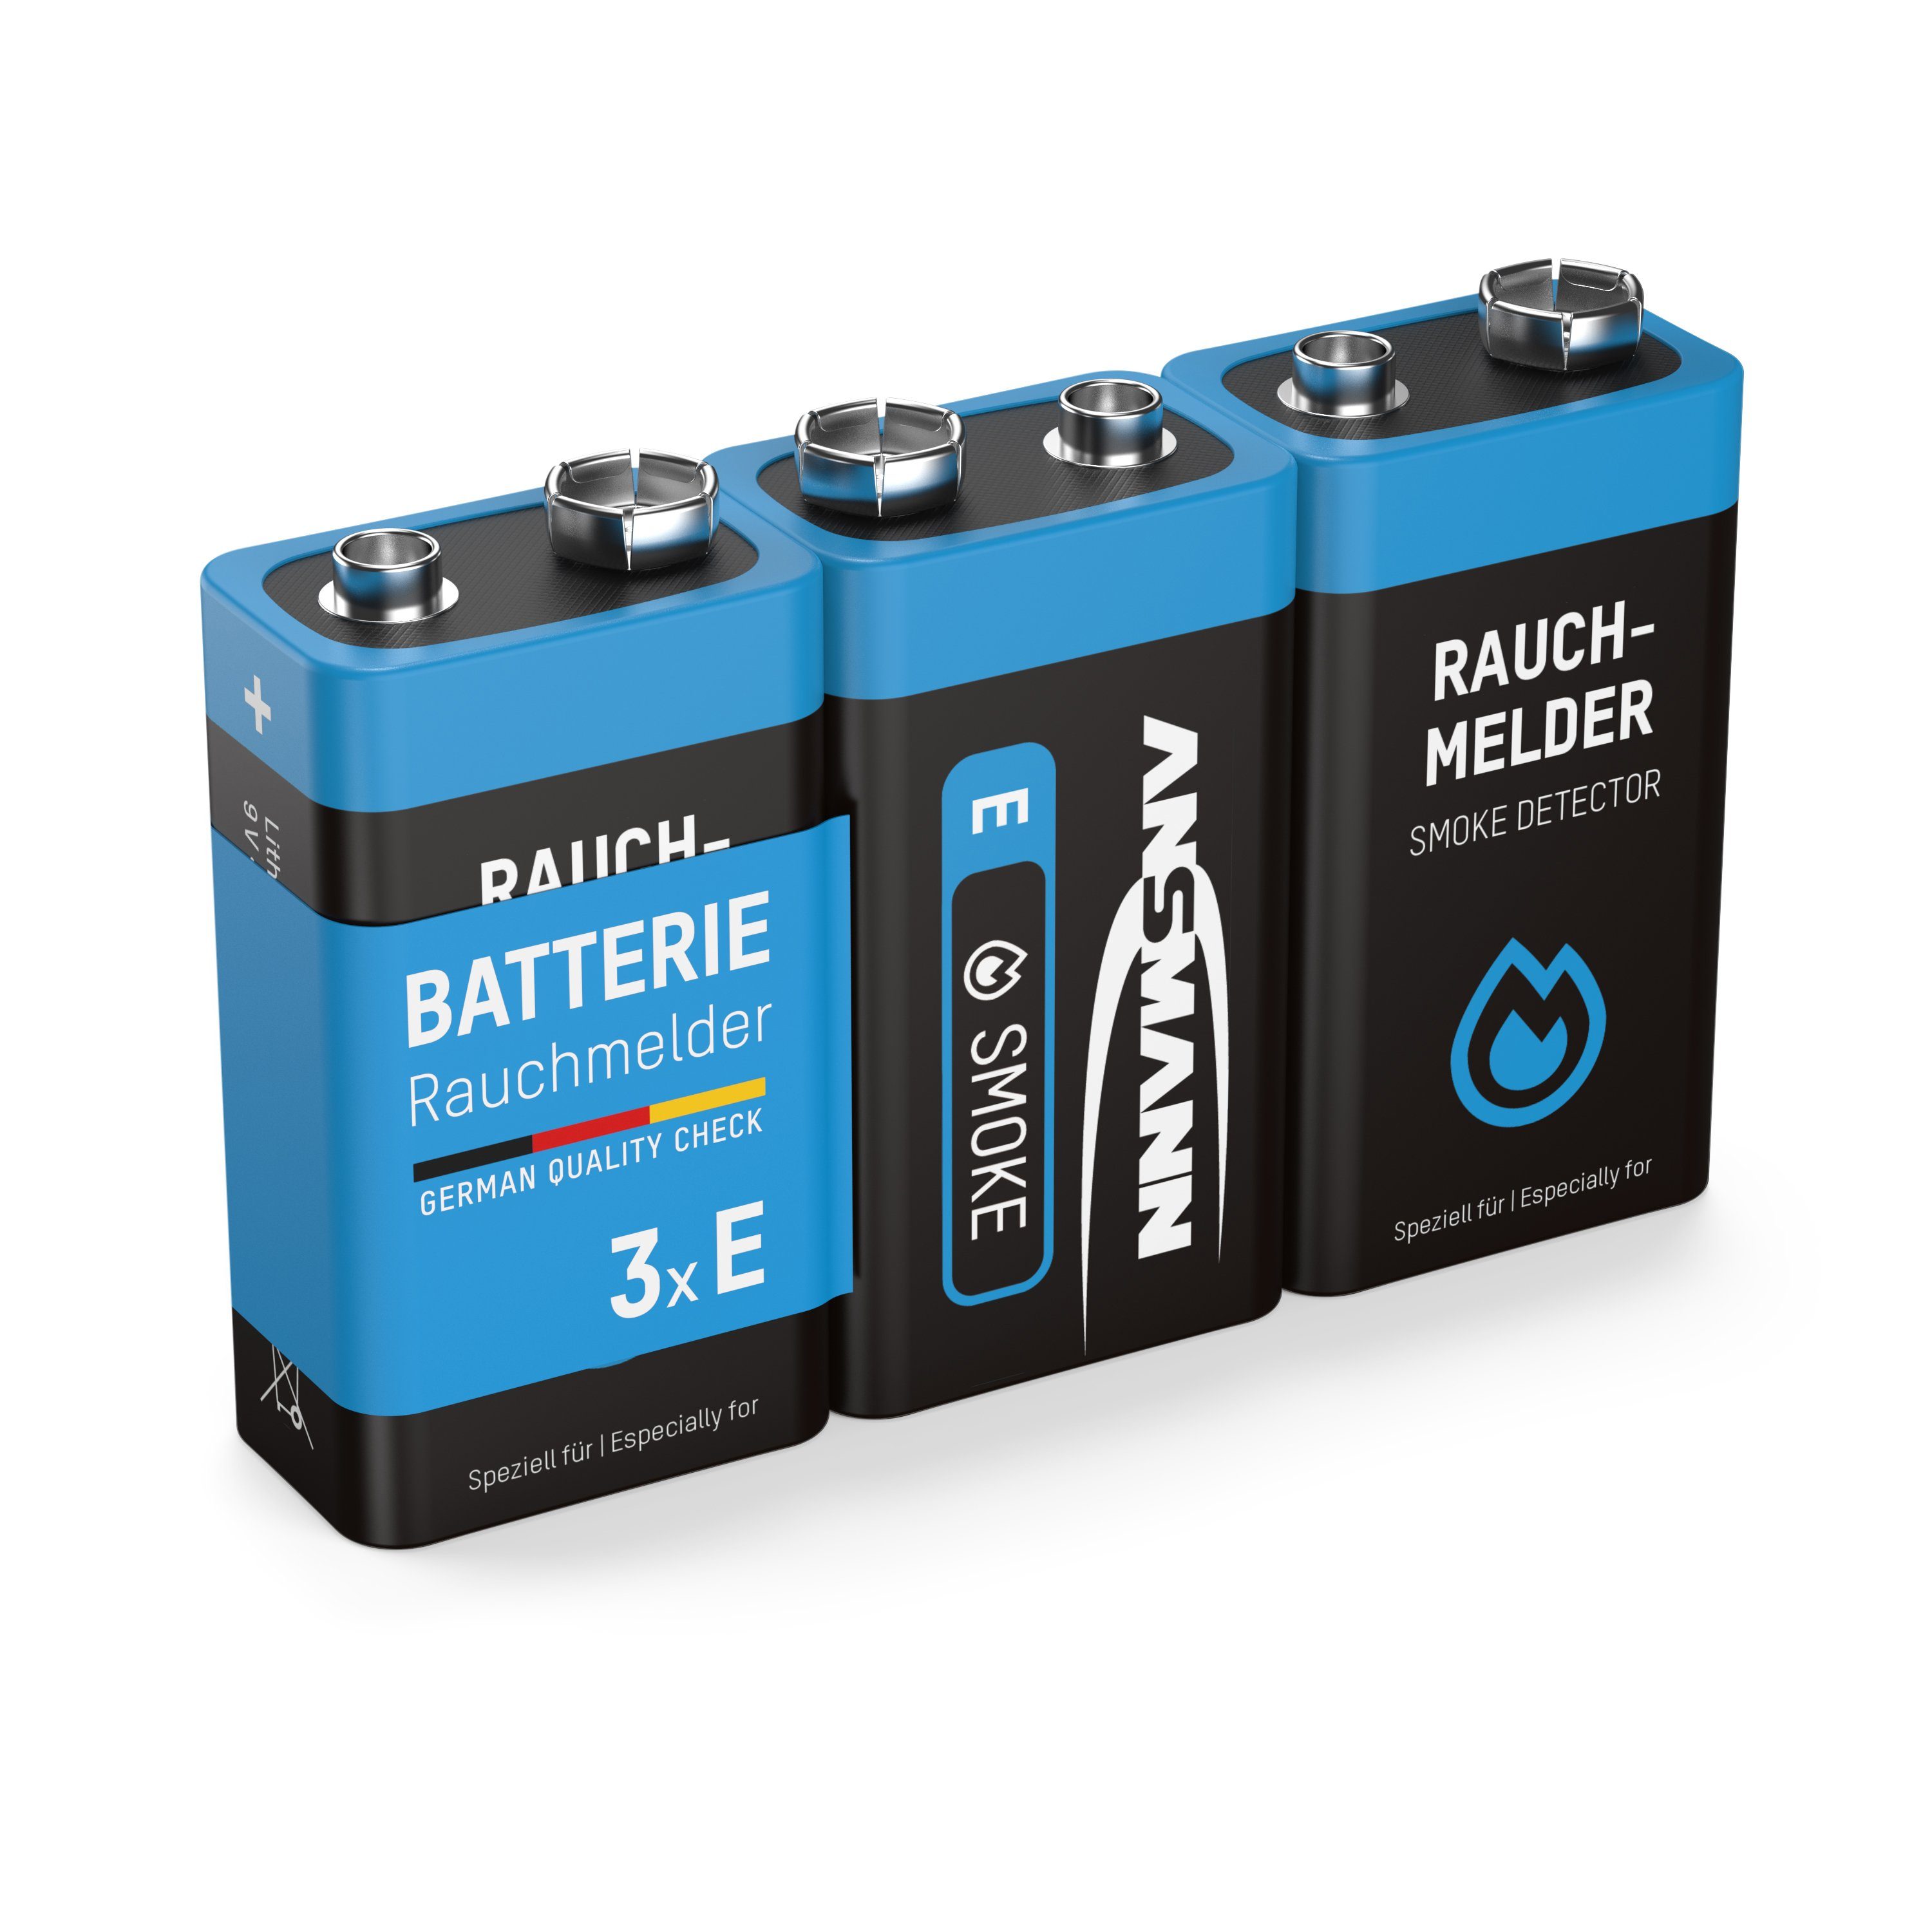 3 longlife Batterien Premium Lithium Rauchmelder ANSMANN® 9V - Qualität Batterie Block